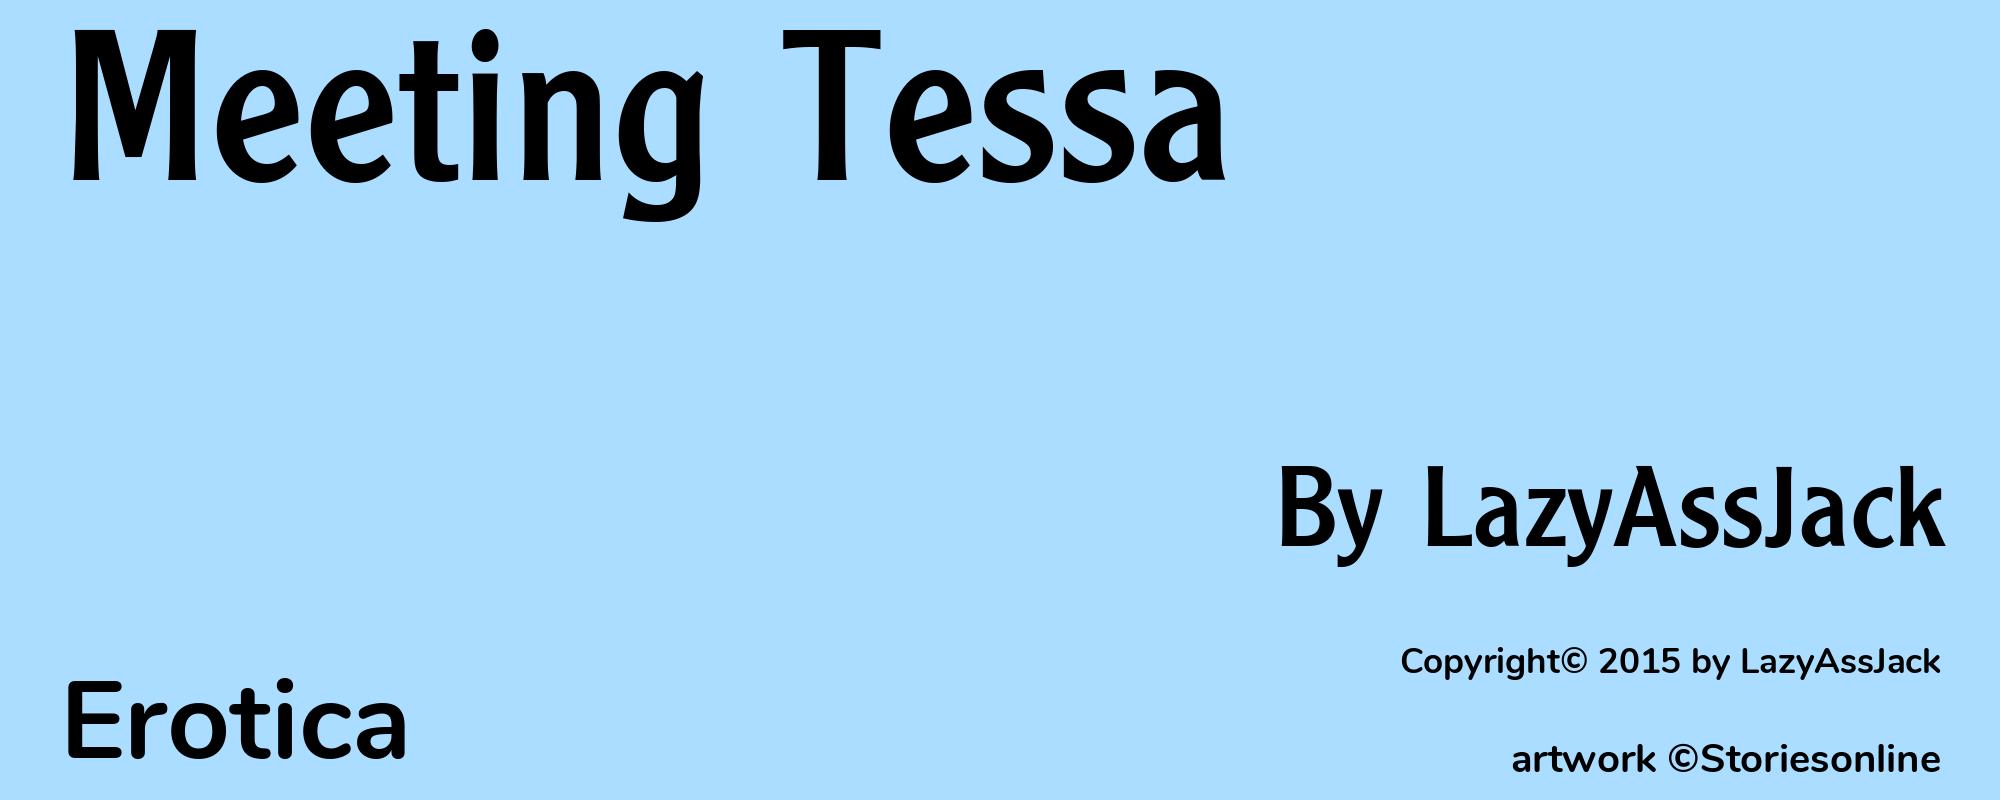 Meeting Tessa - Cover